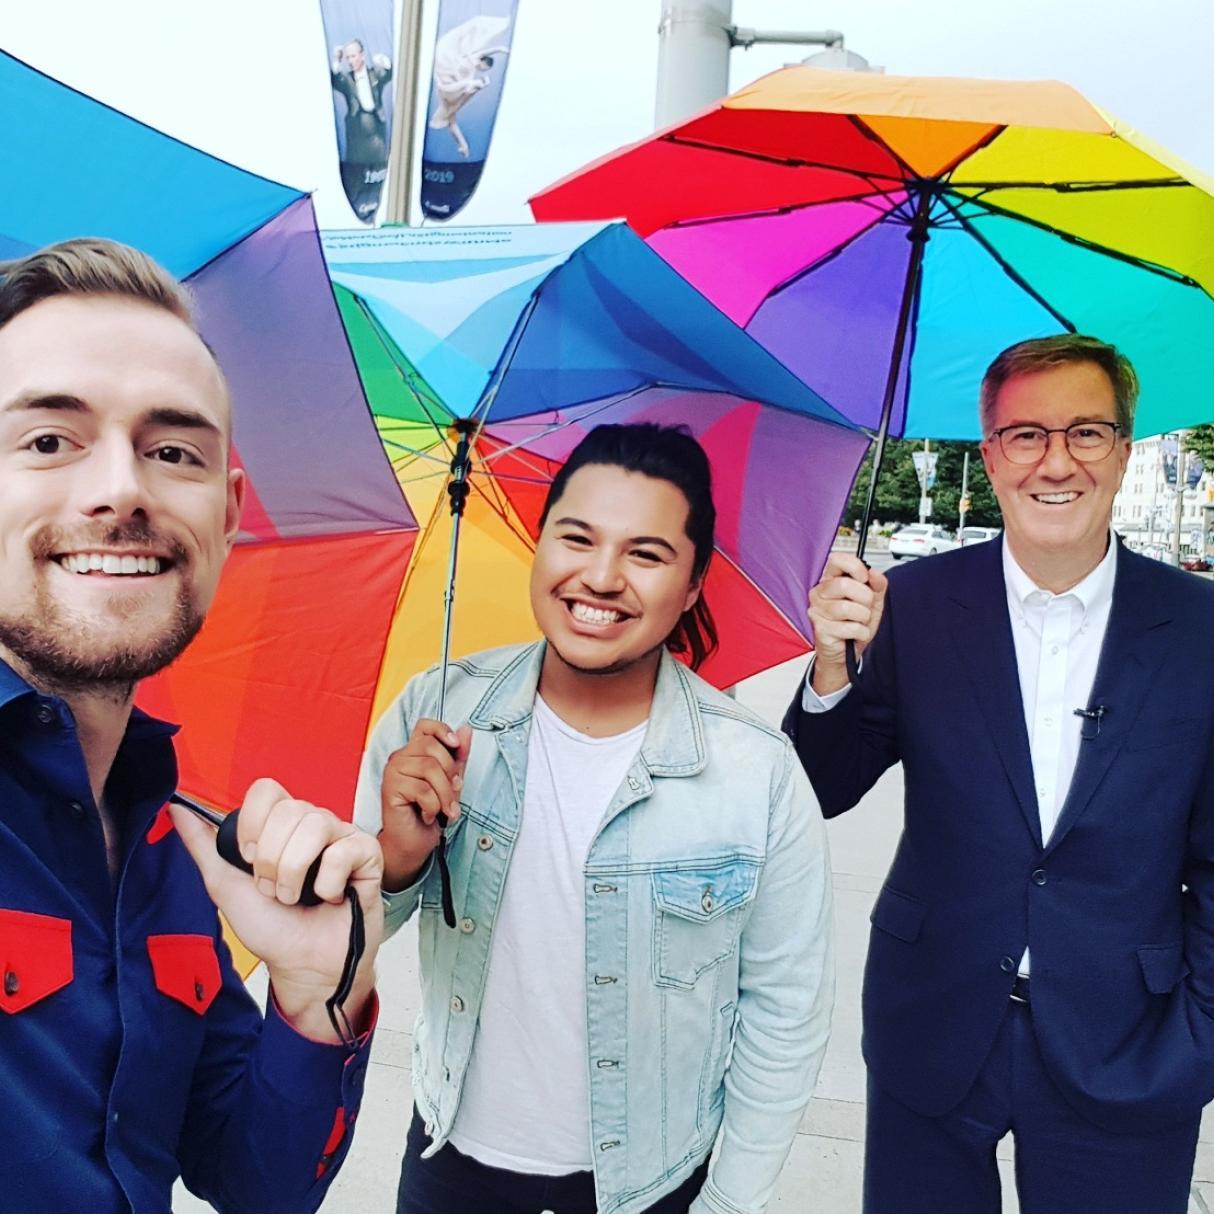 Brett and Cameron hold up rainbow umbrellas